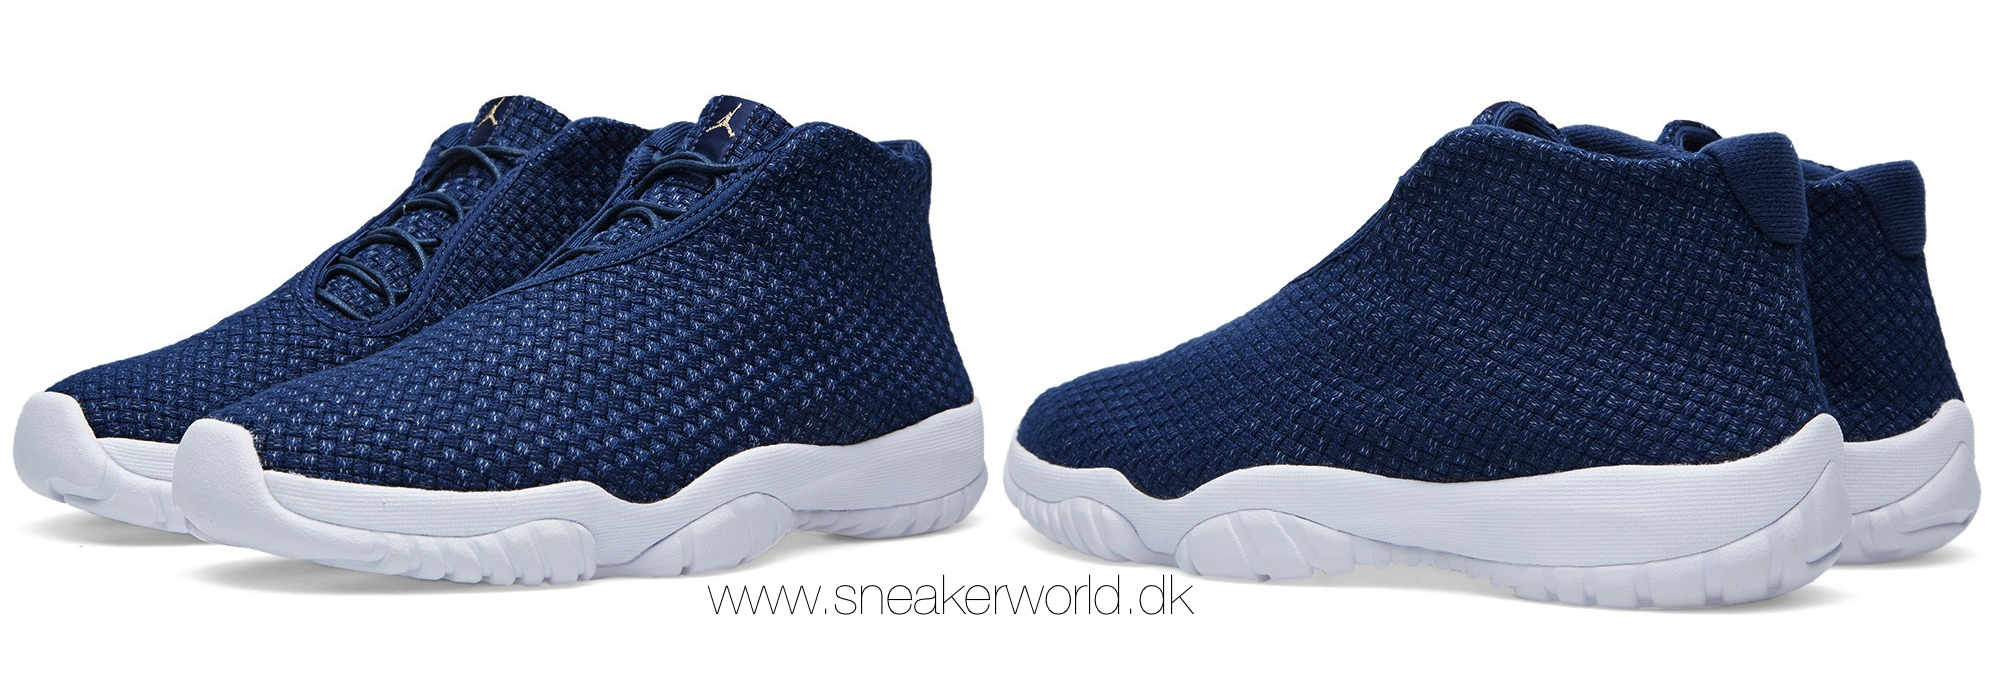 løber tør respekt åbenbaring Nike Air Jordan Future Midnight Navy - Sneakerworld.dk